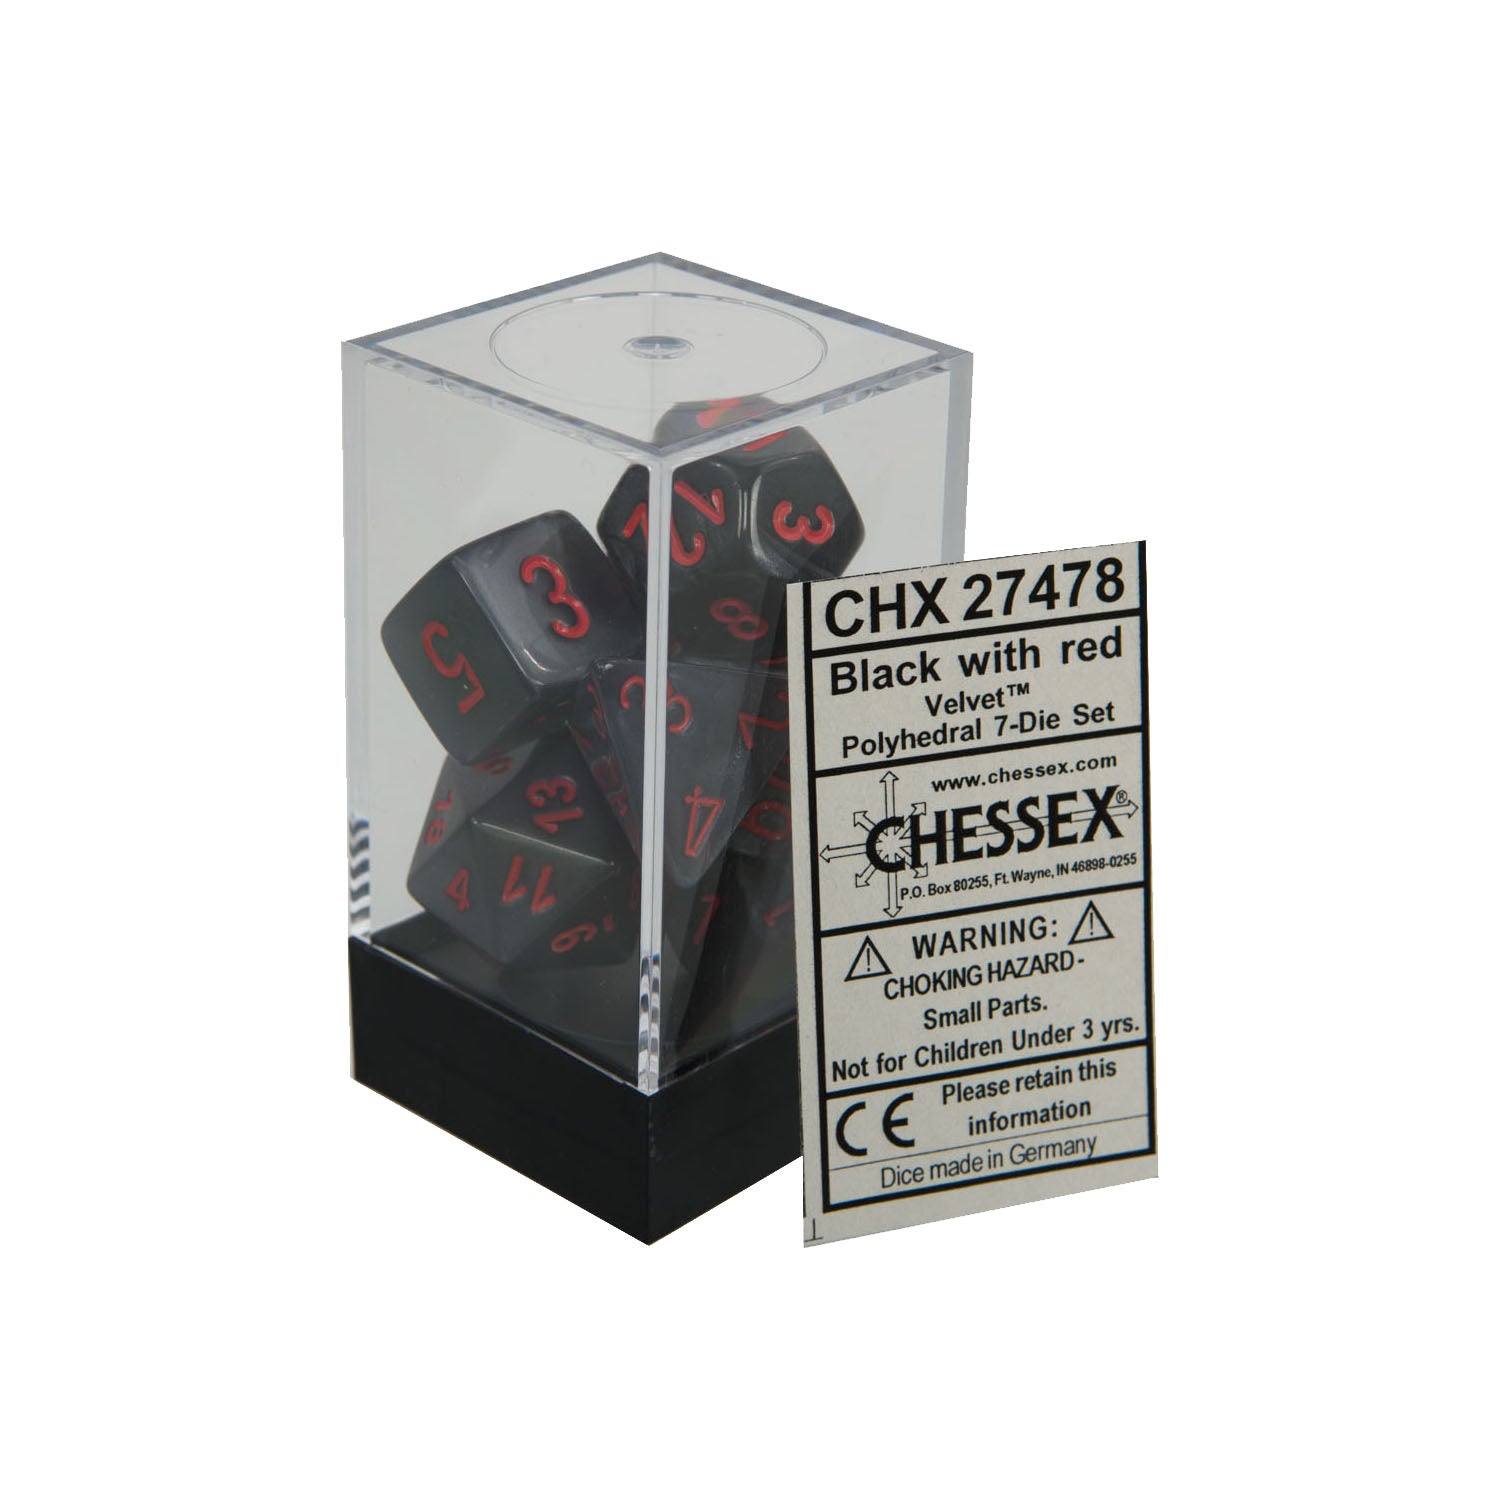 Chessex CHX27478 Black w/ red Velvet™ Polyhedral Dice Set